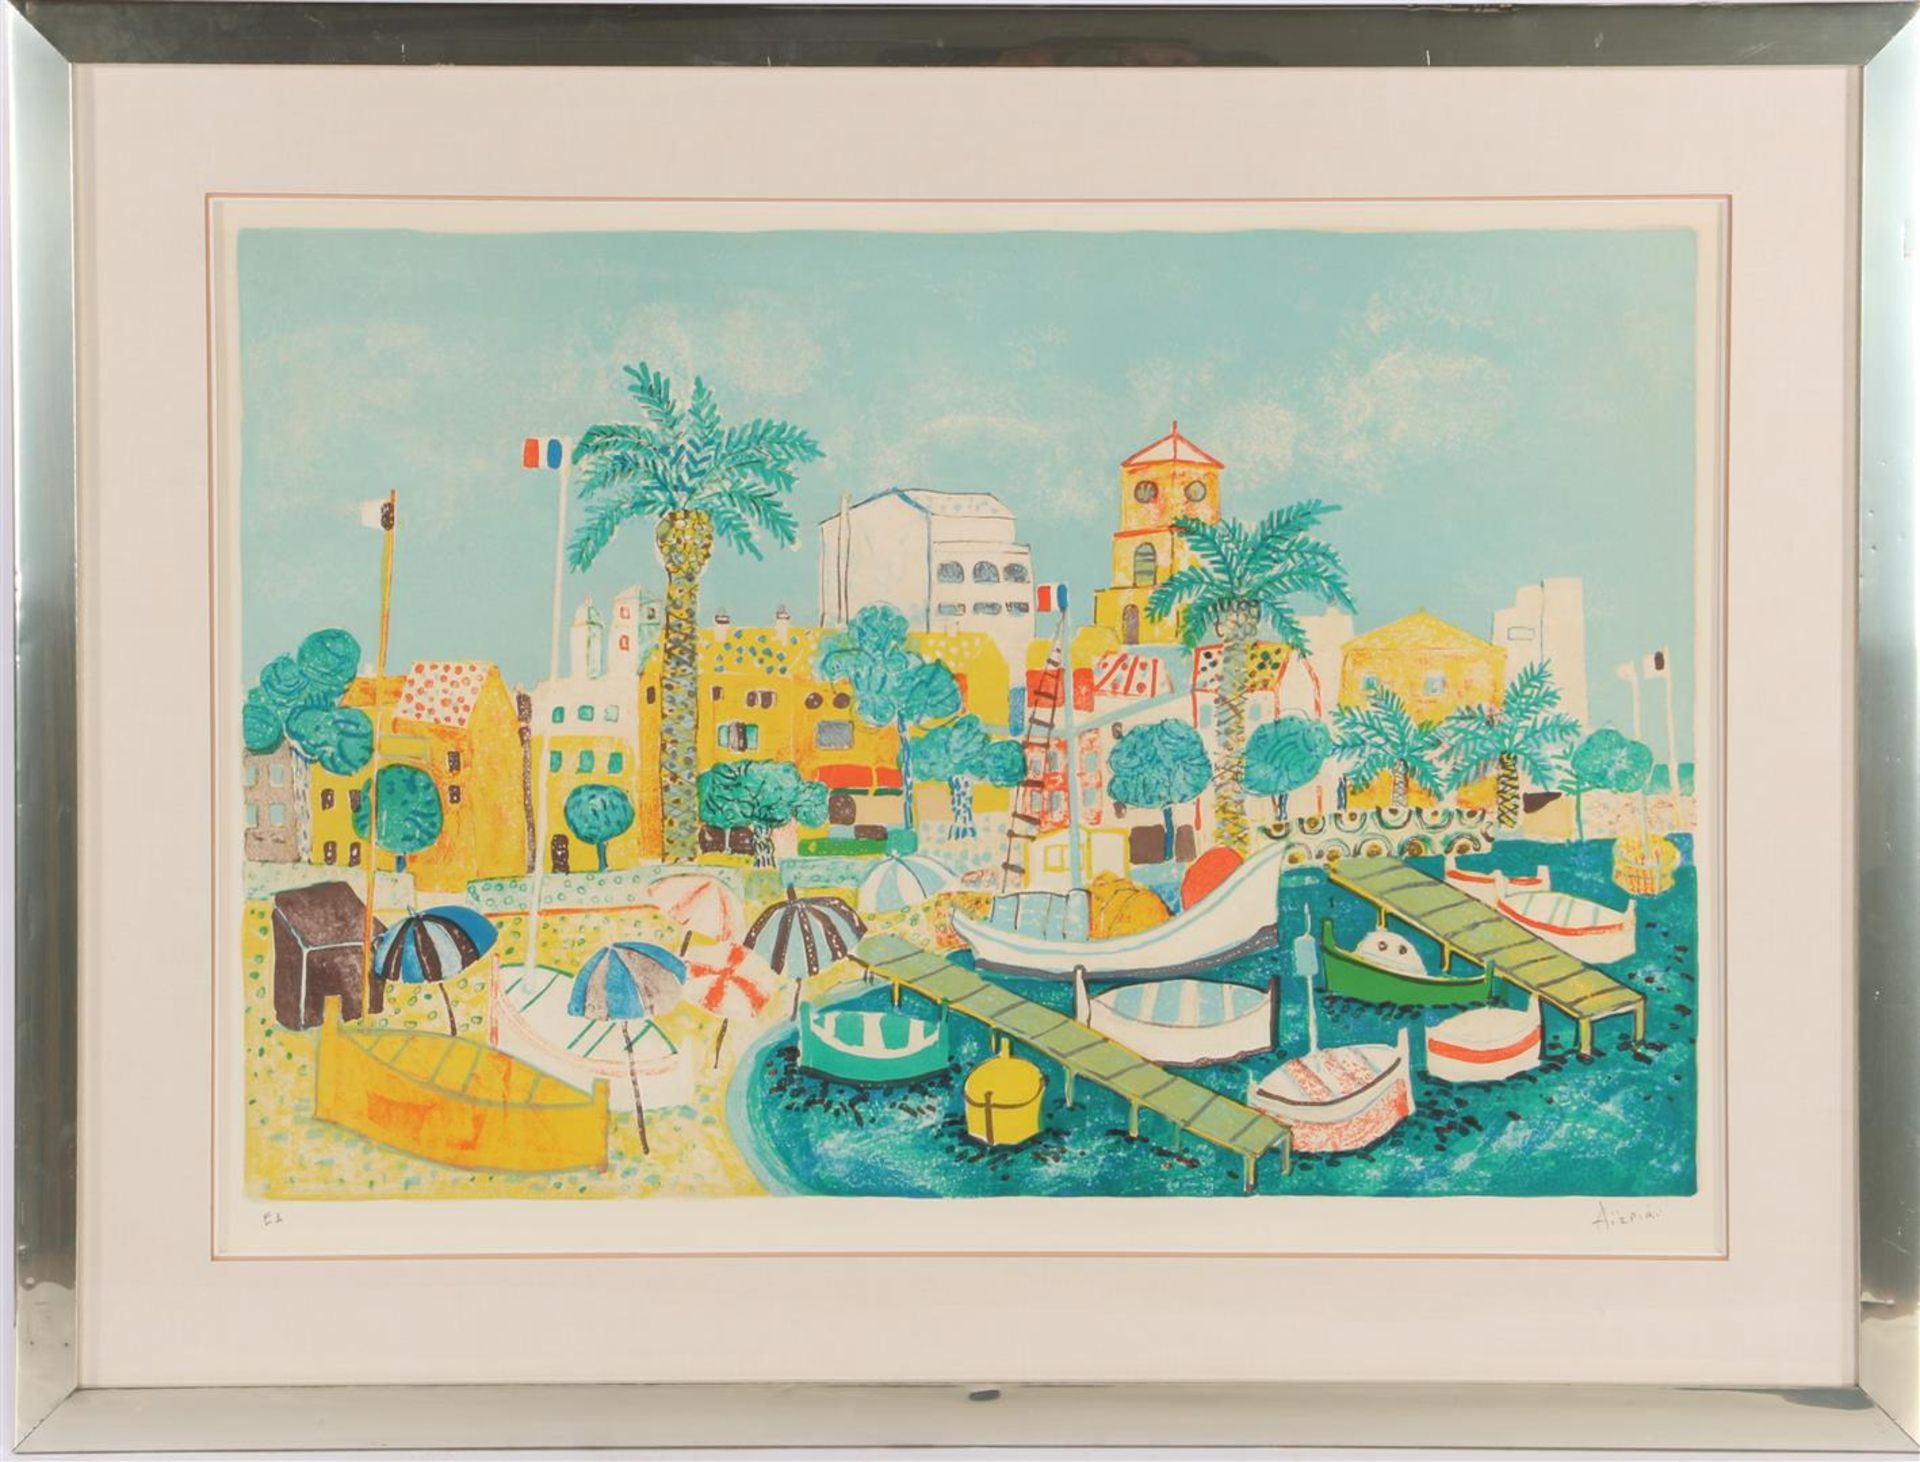 Paul Aizpiri (1919-2016)
French seaside resort, color lithograph EA, 60x90 cm, outer size 90x118 cm